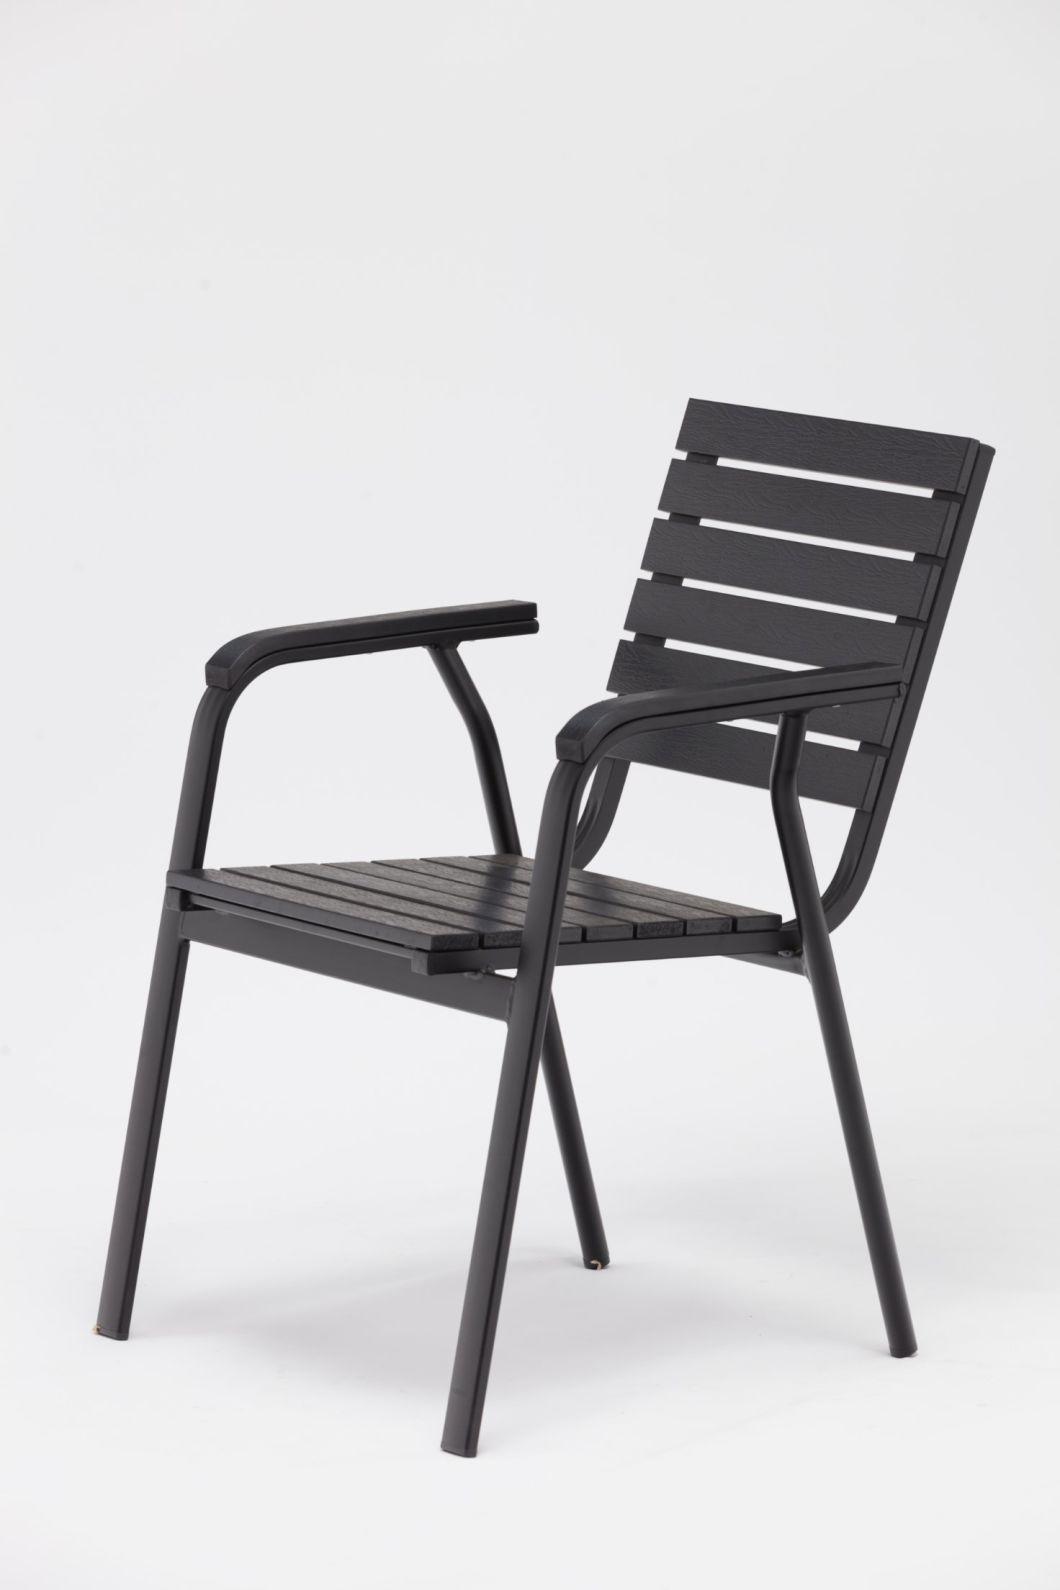 Wholesale Outdoor Furniture Metal Chair Teak Wood Color